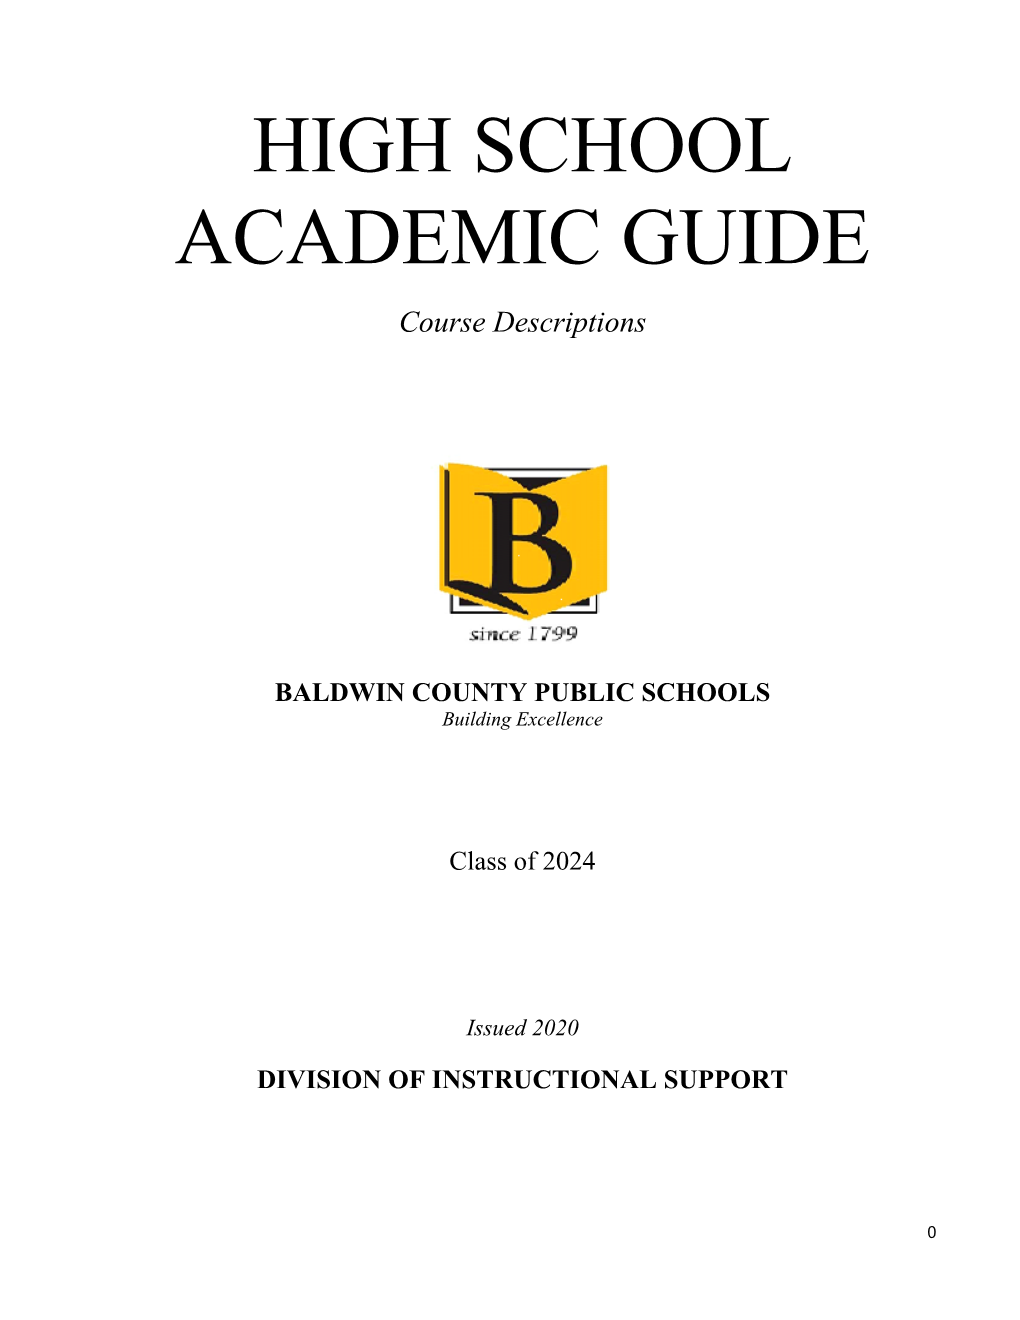 High School Academic Guide